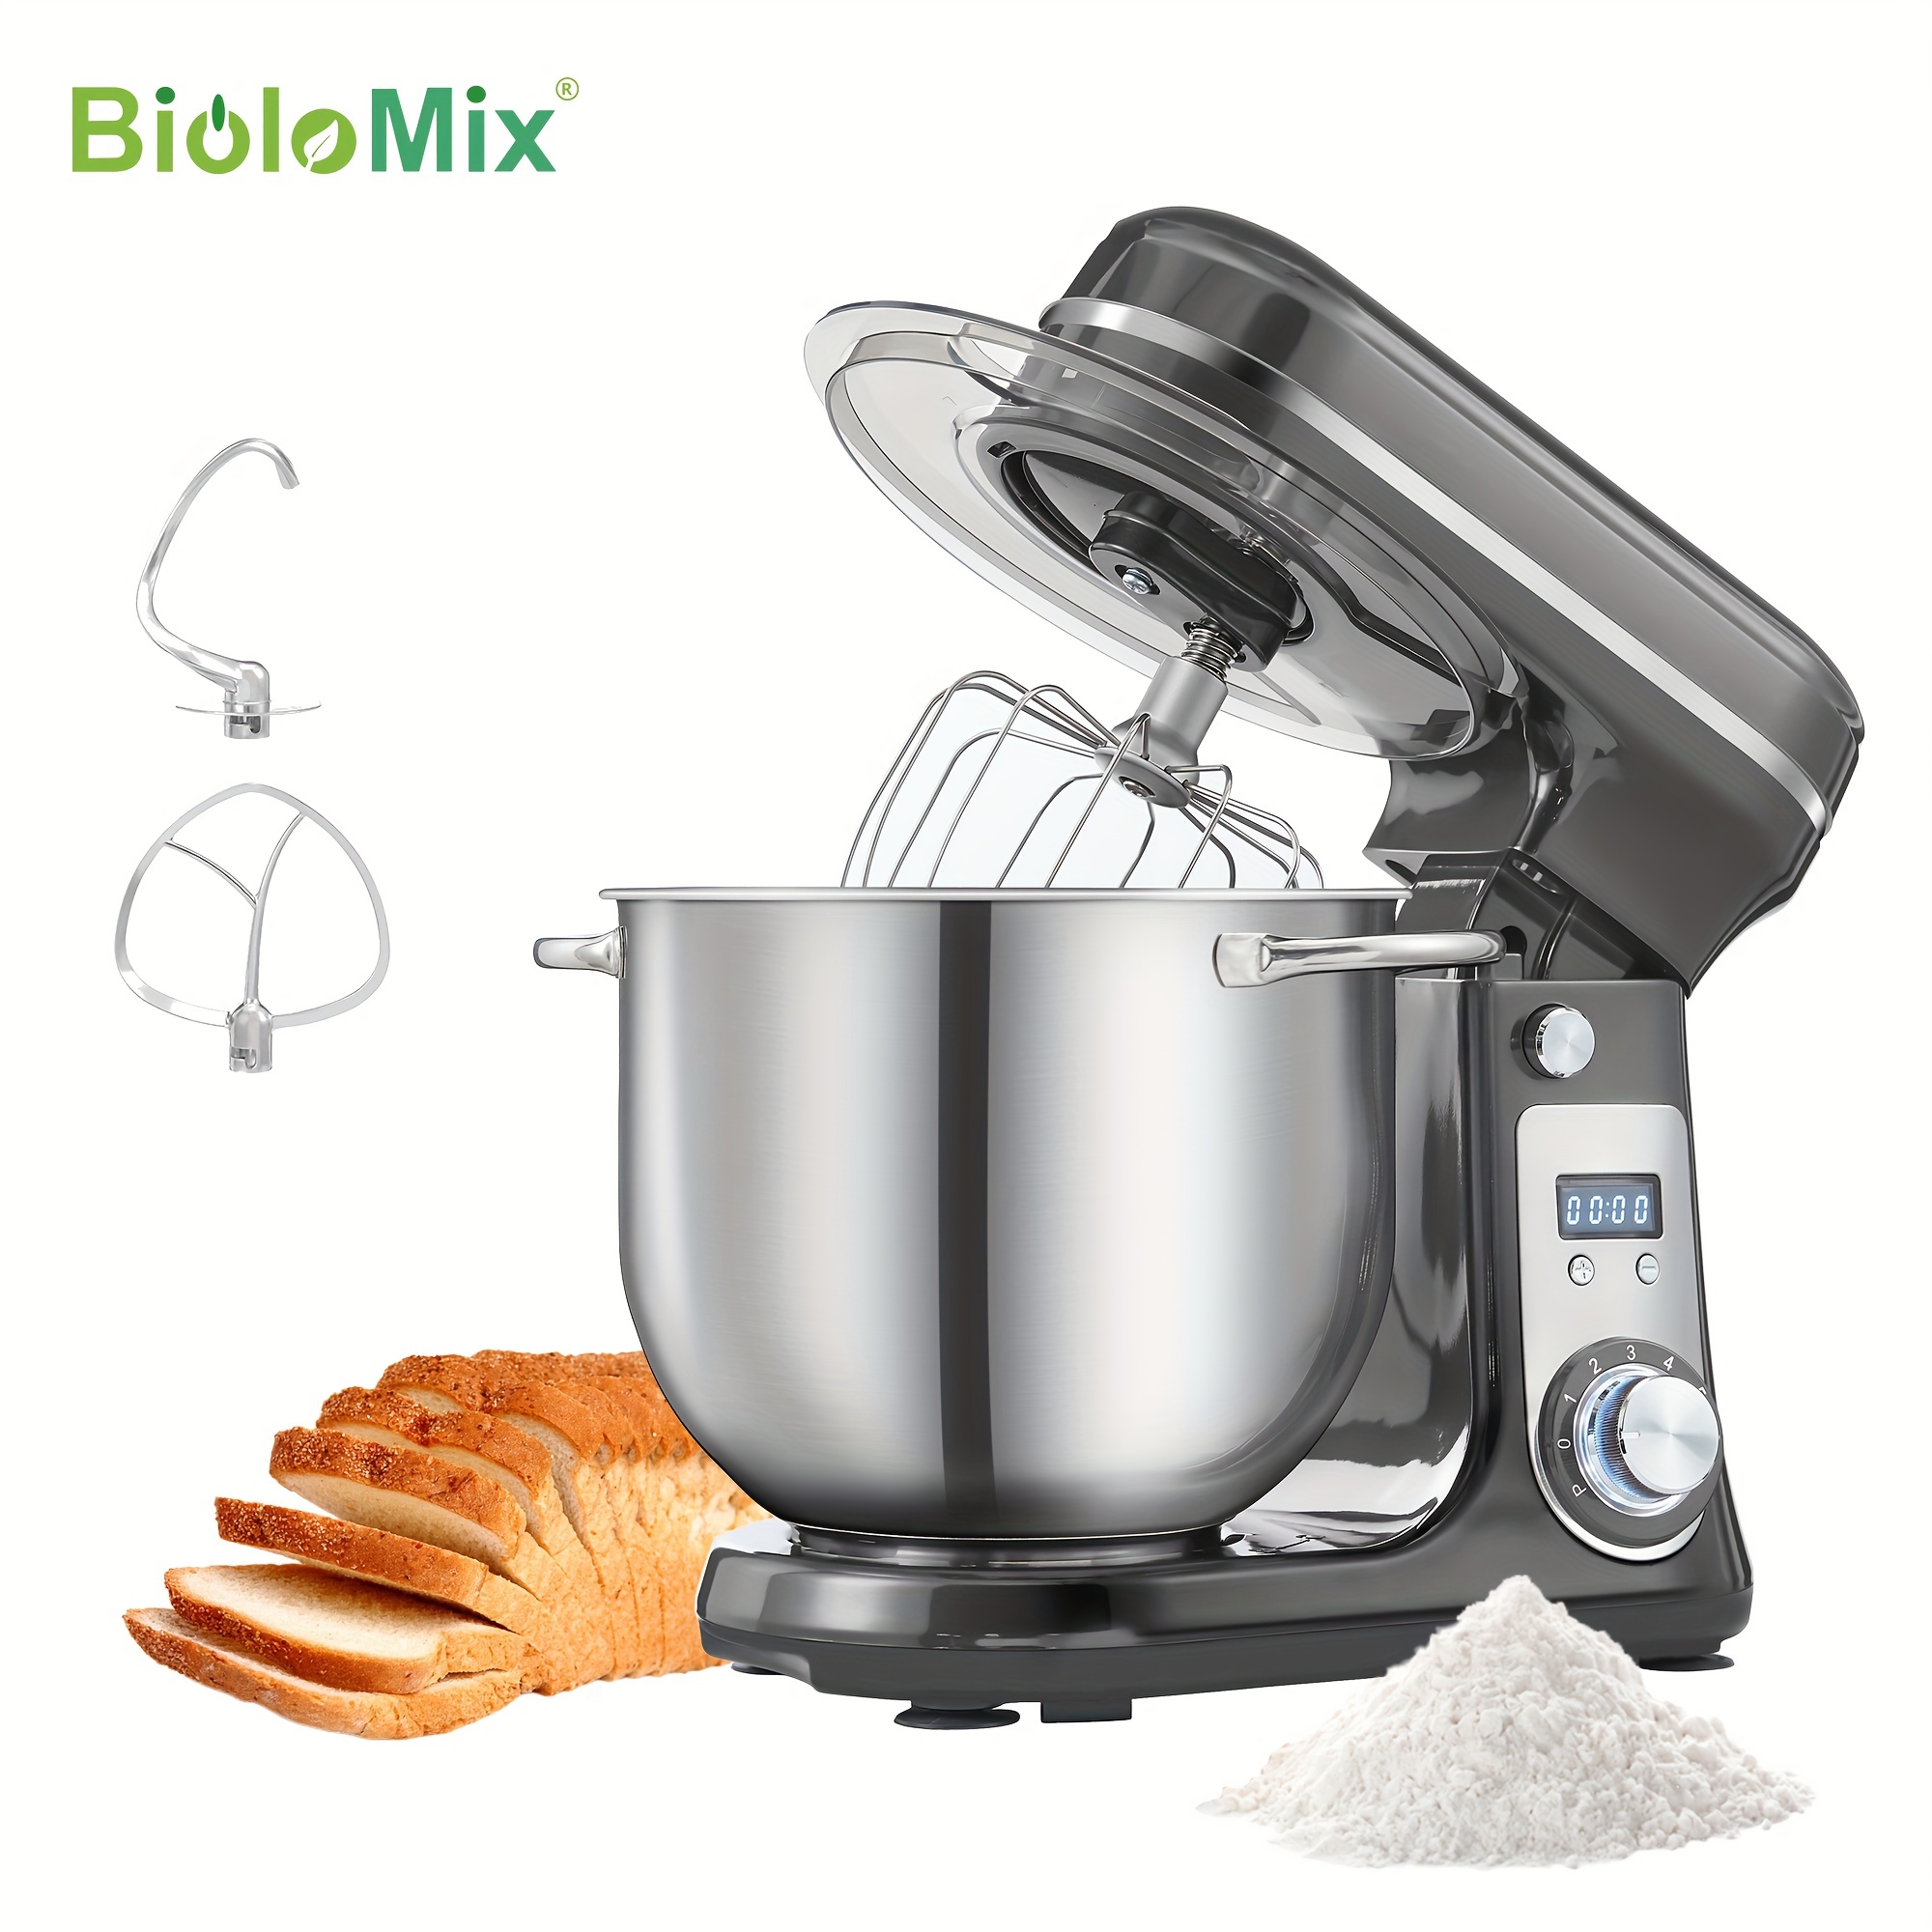 biolomix 6l 1200w dc quiet motor 6 speed kitchen food processors stand mixer cream egg whisk whip dough kneader blender